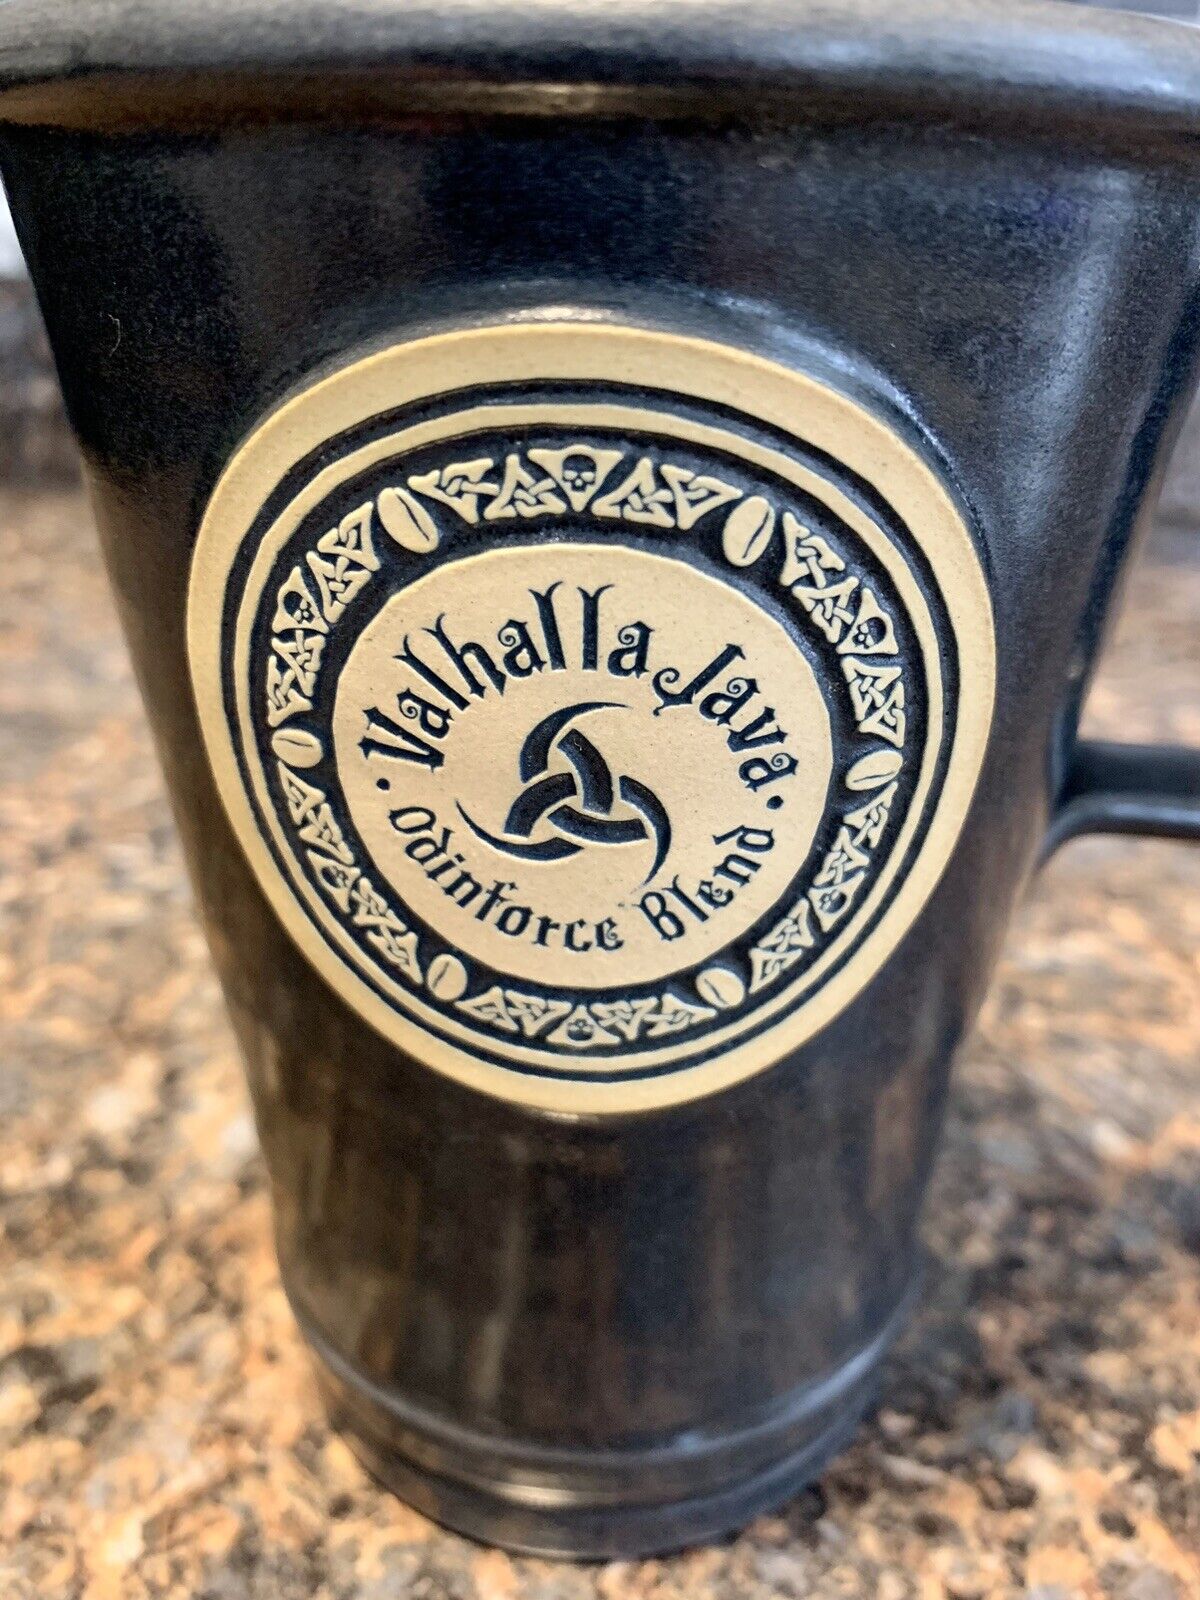 Death Wish Coffee 2016 Valhalla Java Viking Odinforce Blend Limited Edition Mug